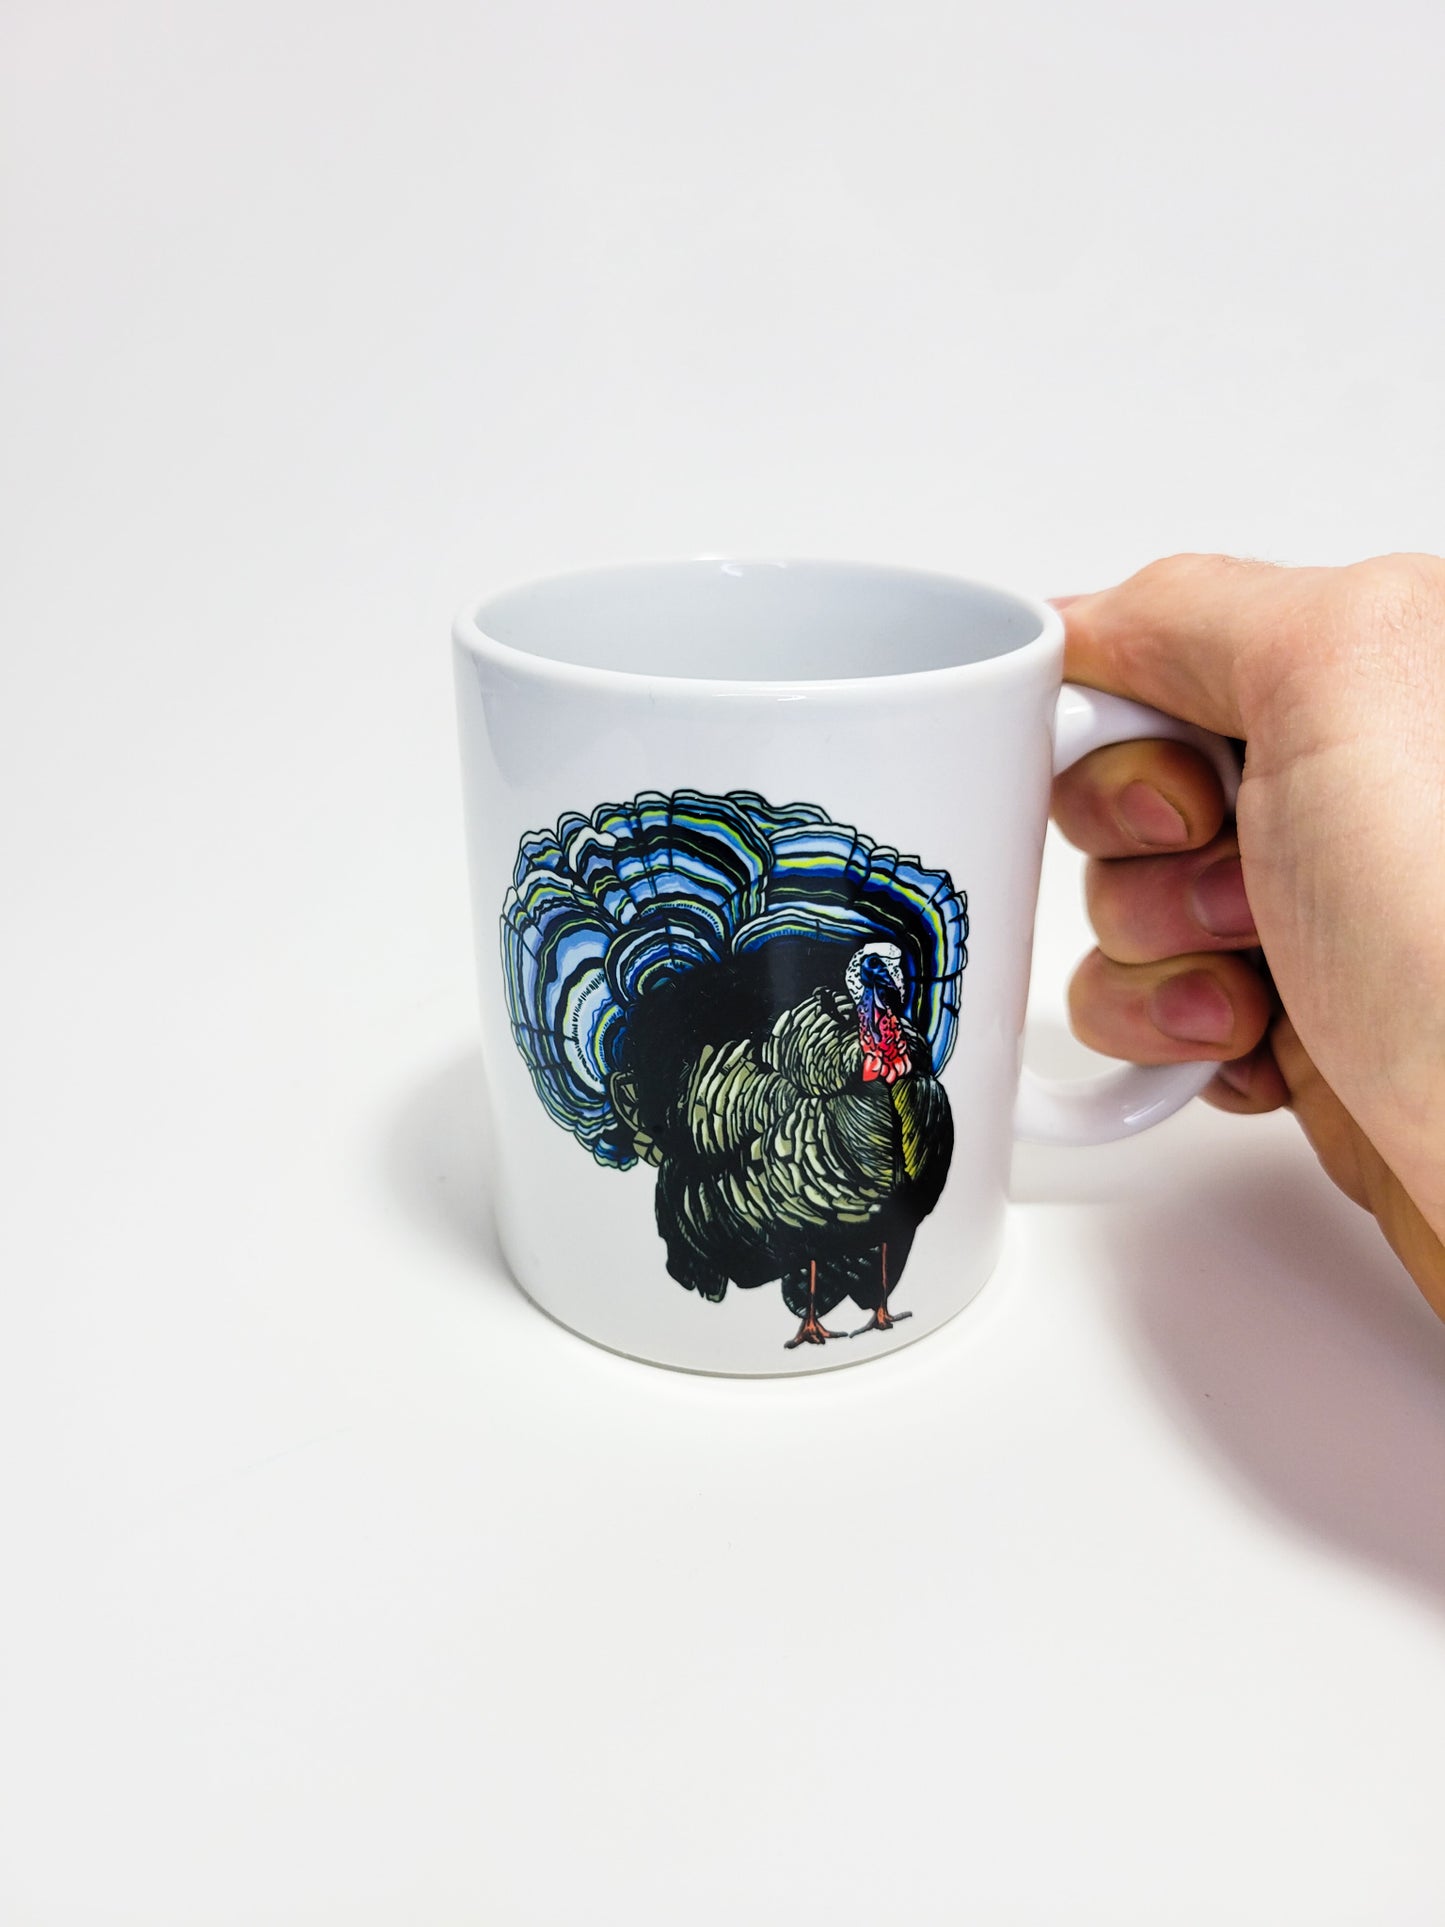 Turkey Tail | Funny Mushroom Mug | Mushroom Artwork on Ceramic Cup | 11oz/15oz Sizes